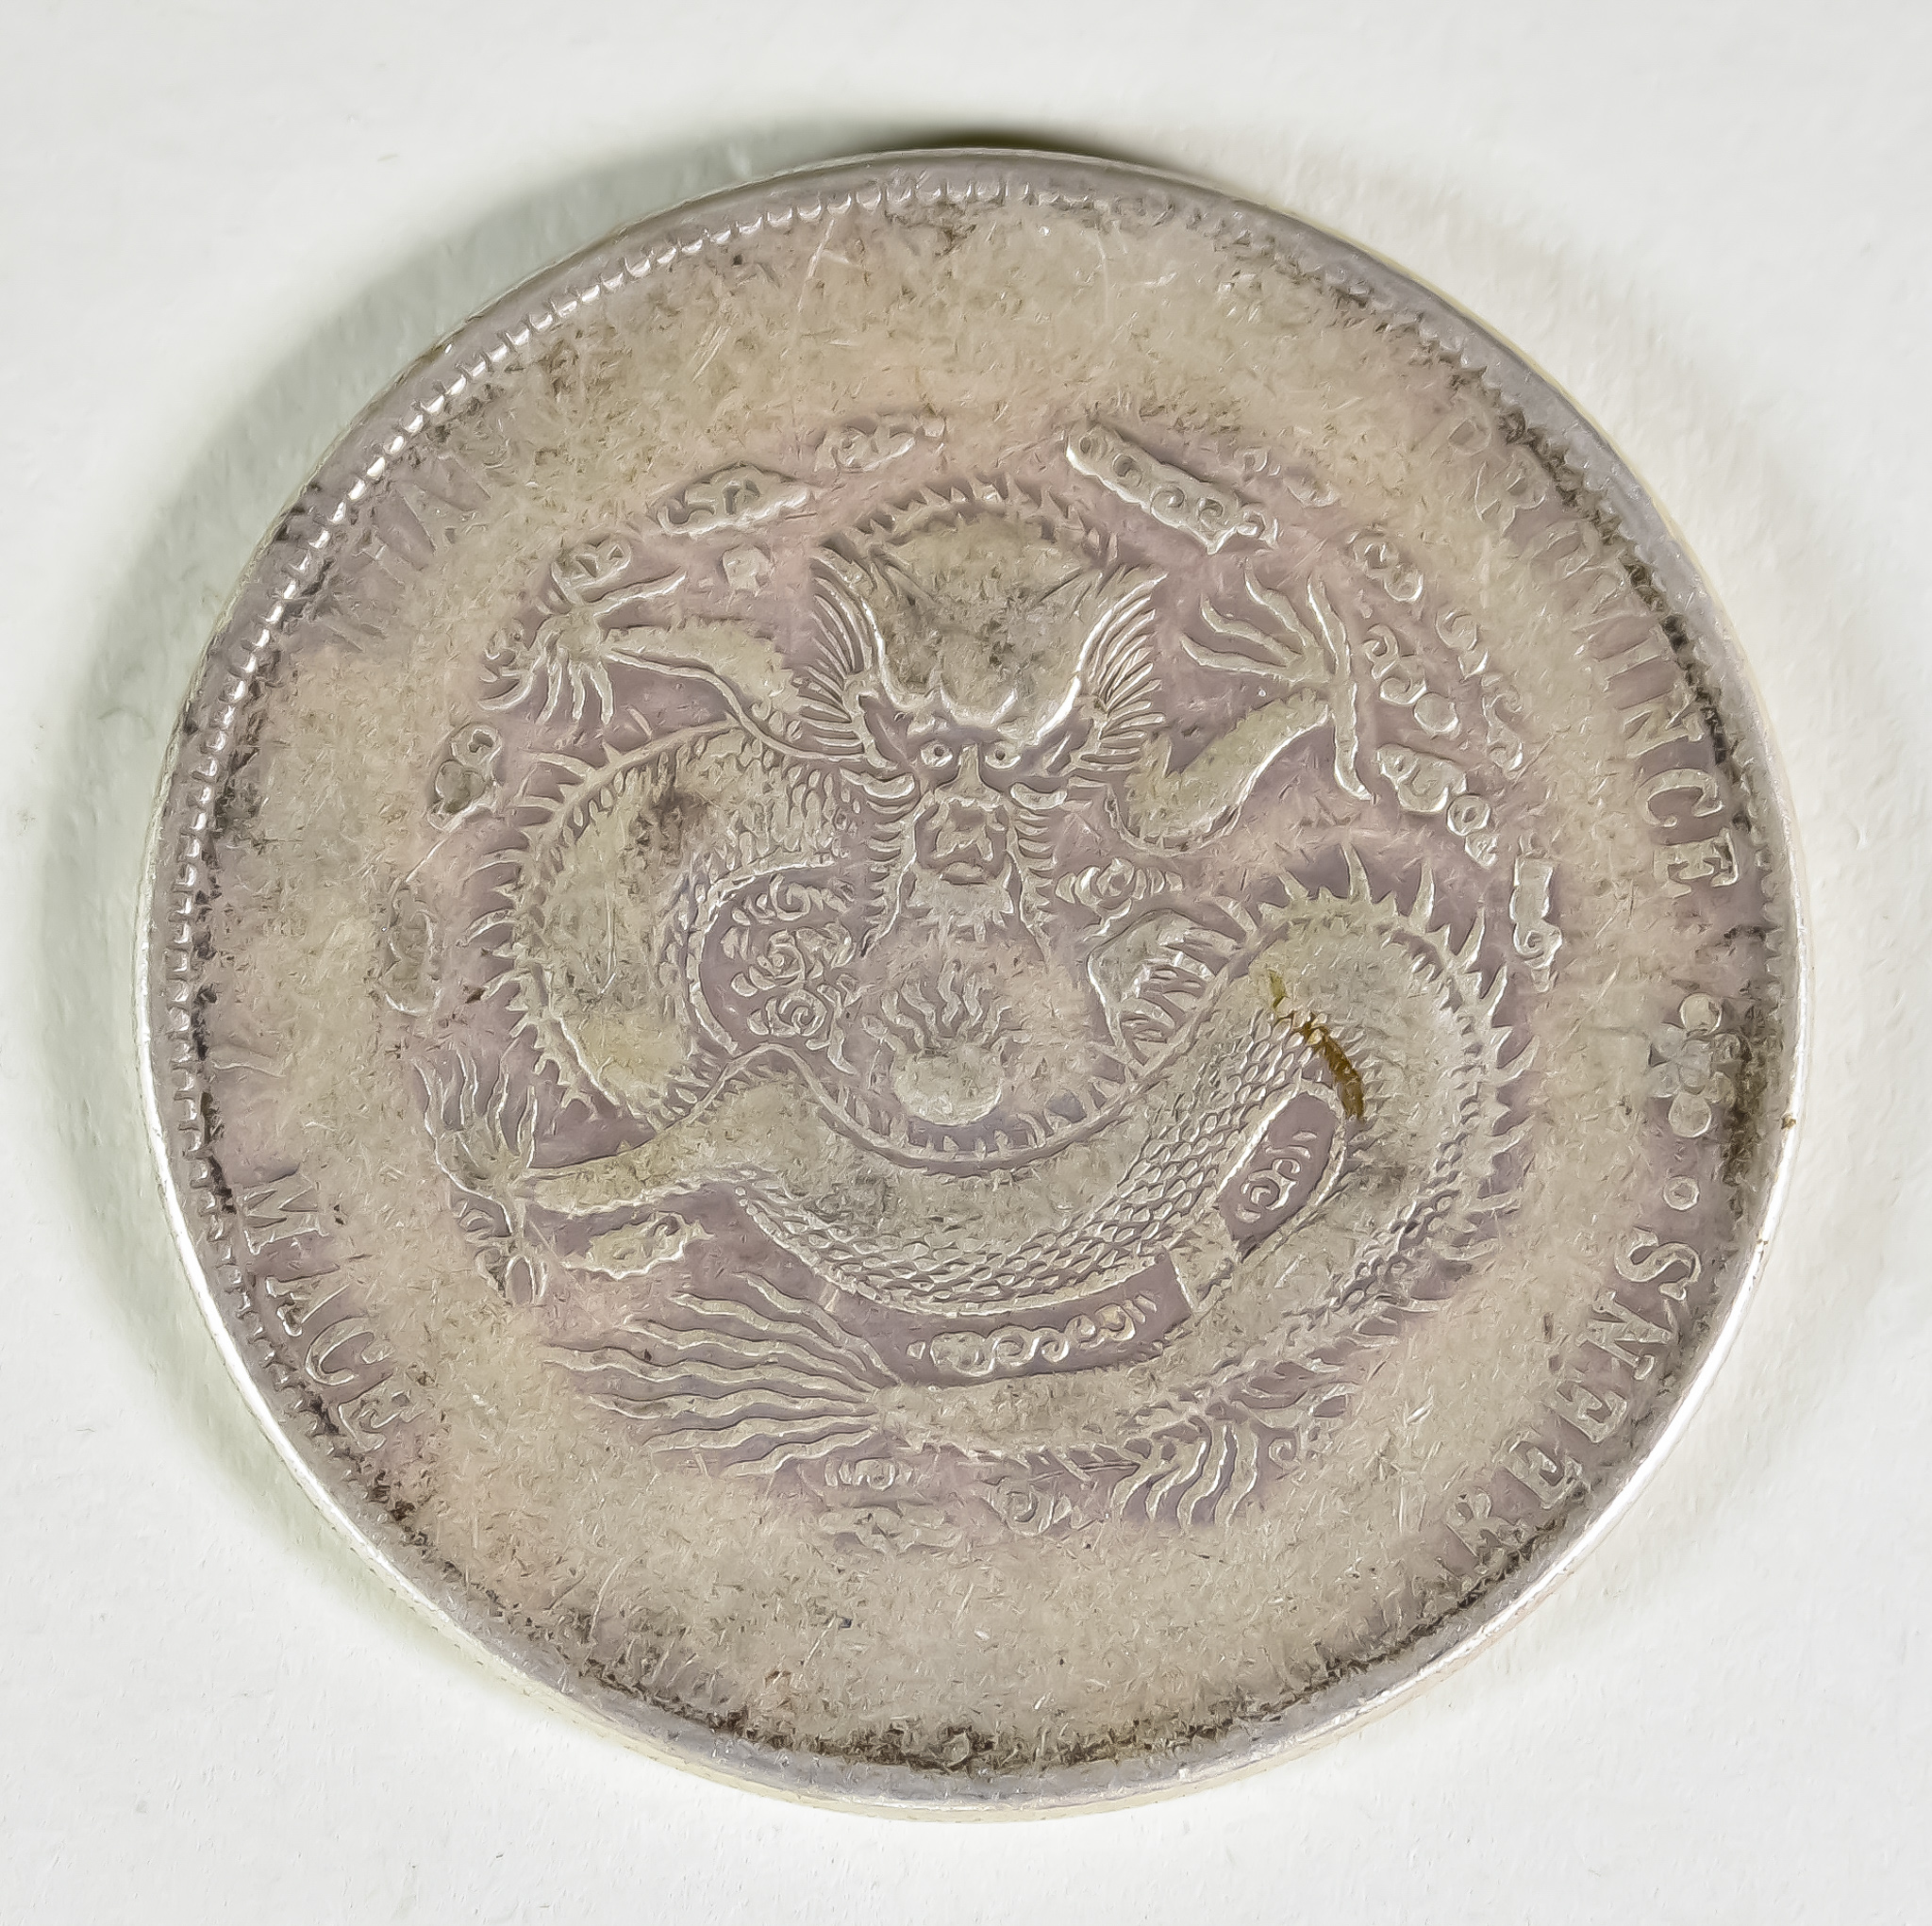 Qing Dynasty - Kiangnan Province Silver Dollar, Circa 1904, 39mm diameter, 26.8g, fine (worn) - Image 2 of 2